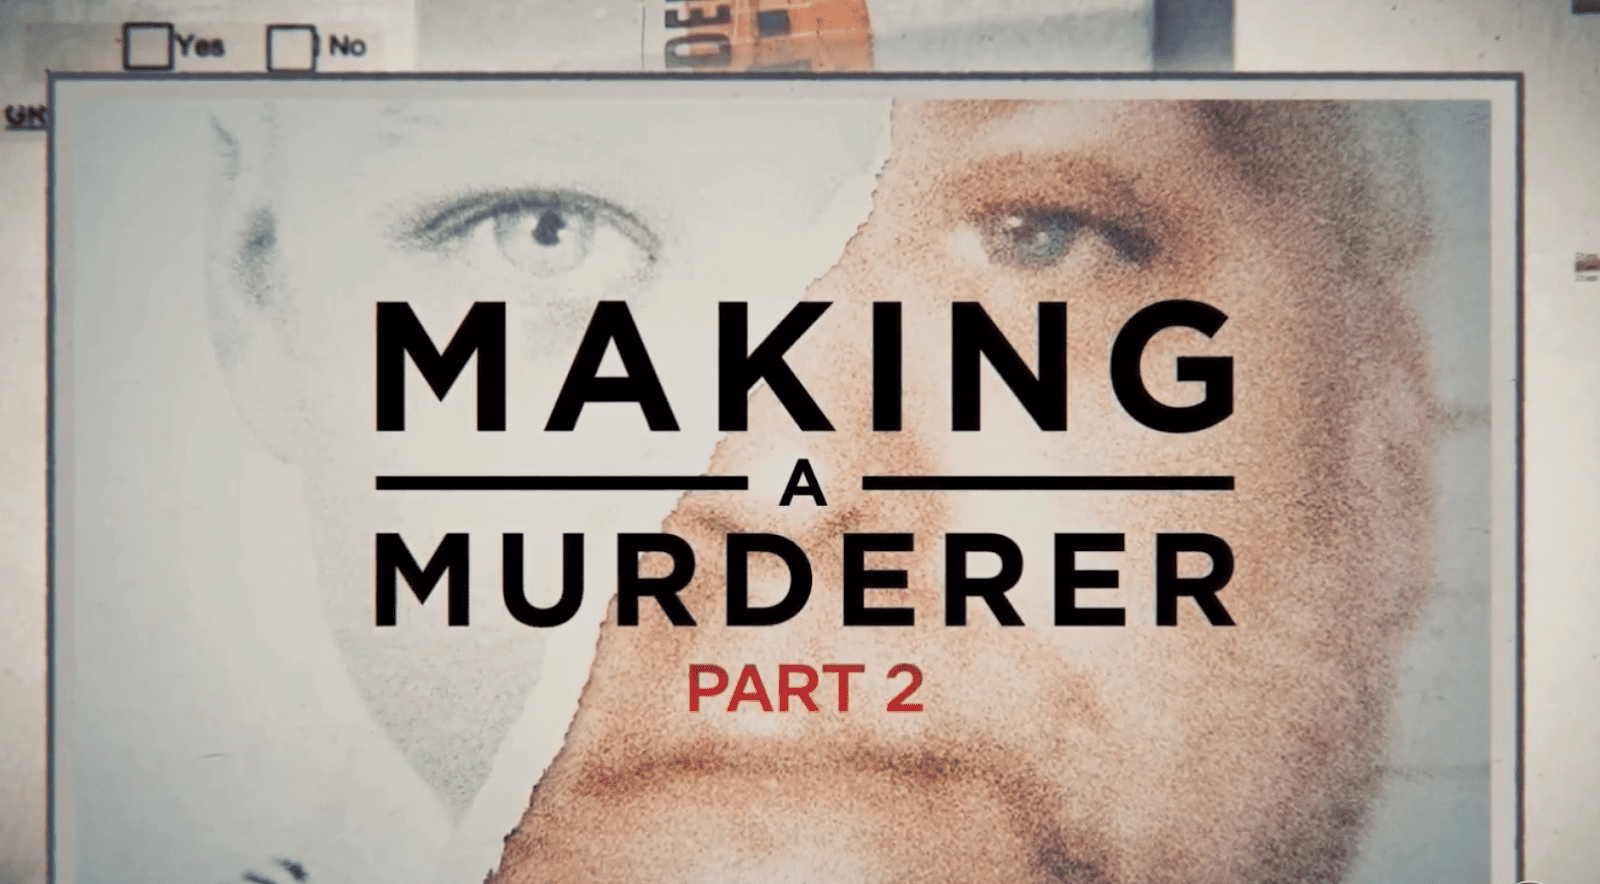  Poster for “Making a Murderer” showing a composite of men’s mugshots